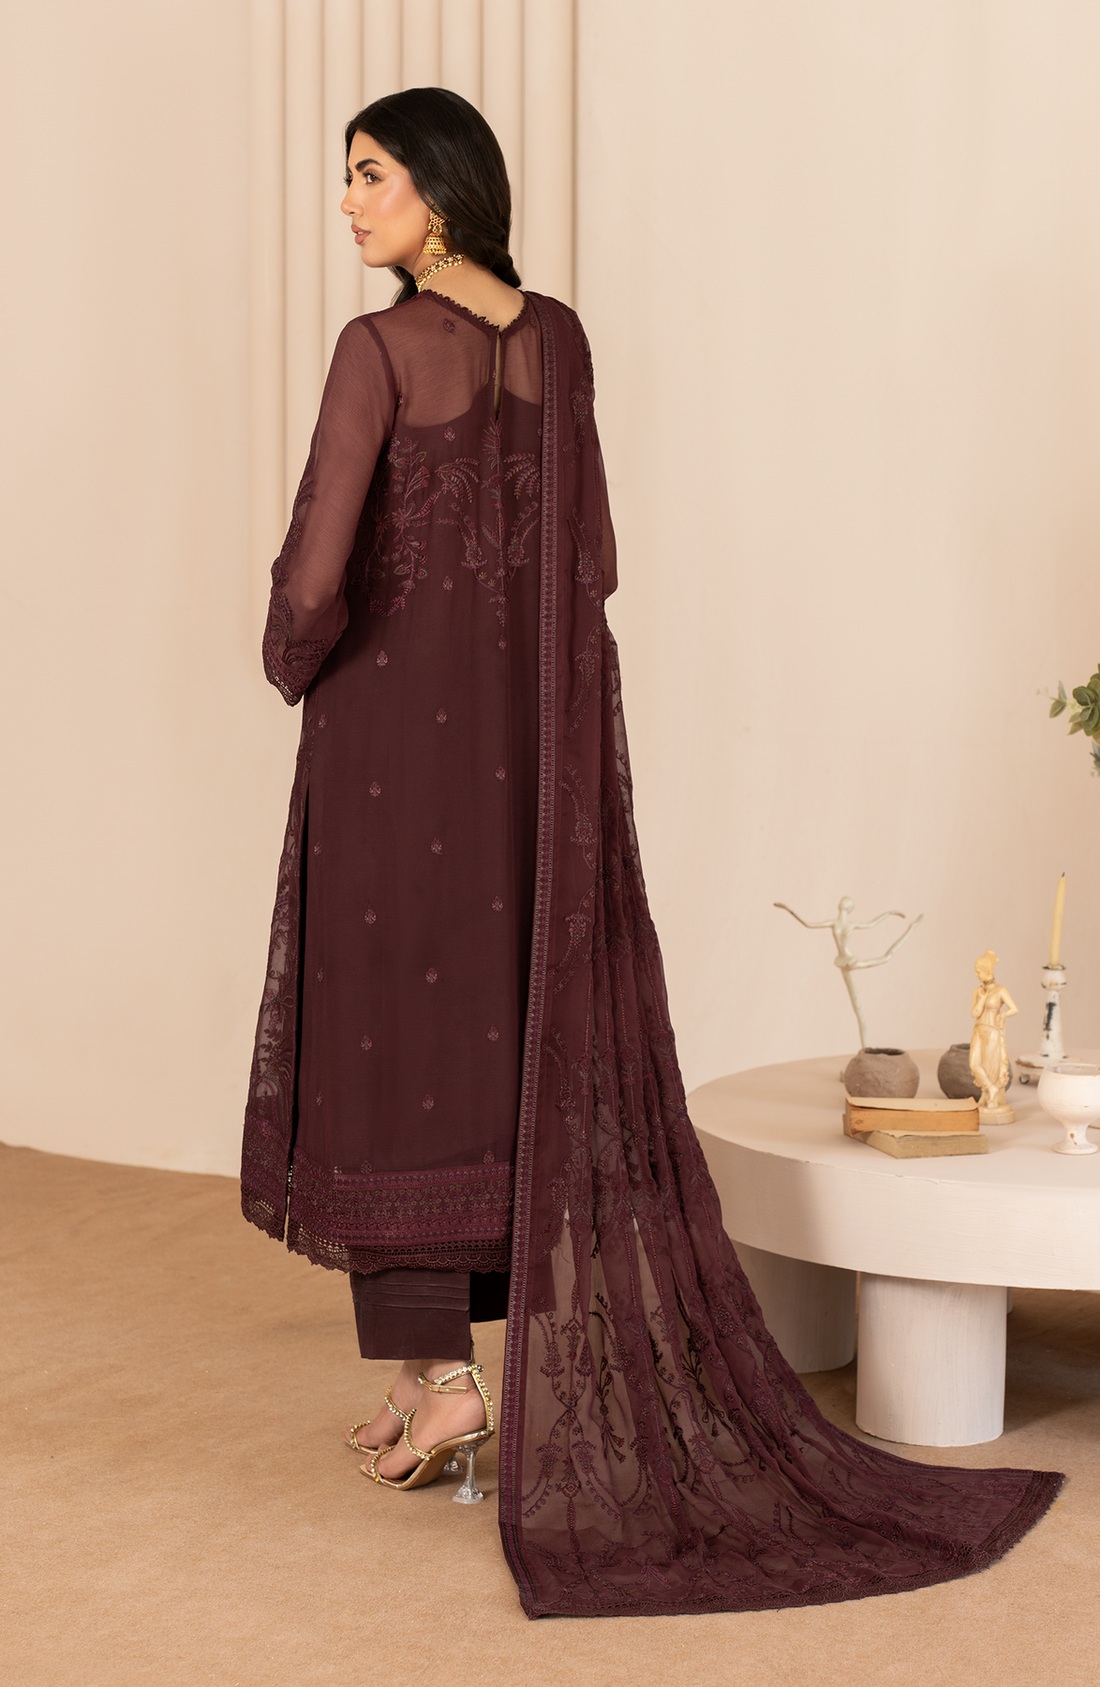 Zarif | Chiffon Edit  | ZL 03 HALA - Khanumjan  Pakistani Clothes and Designer Dresses in UK, USA 